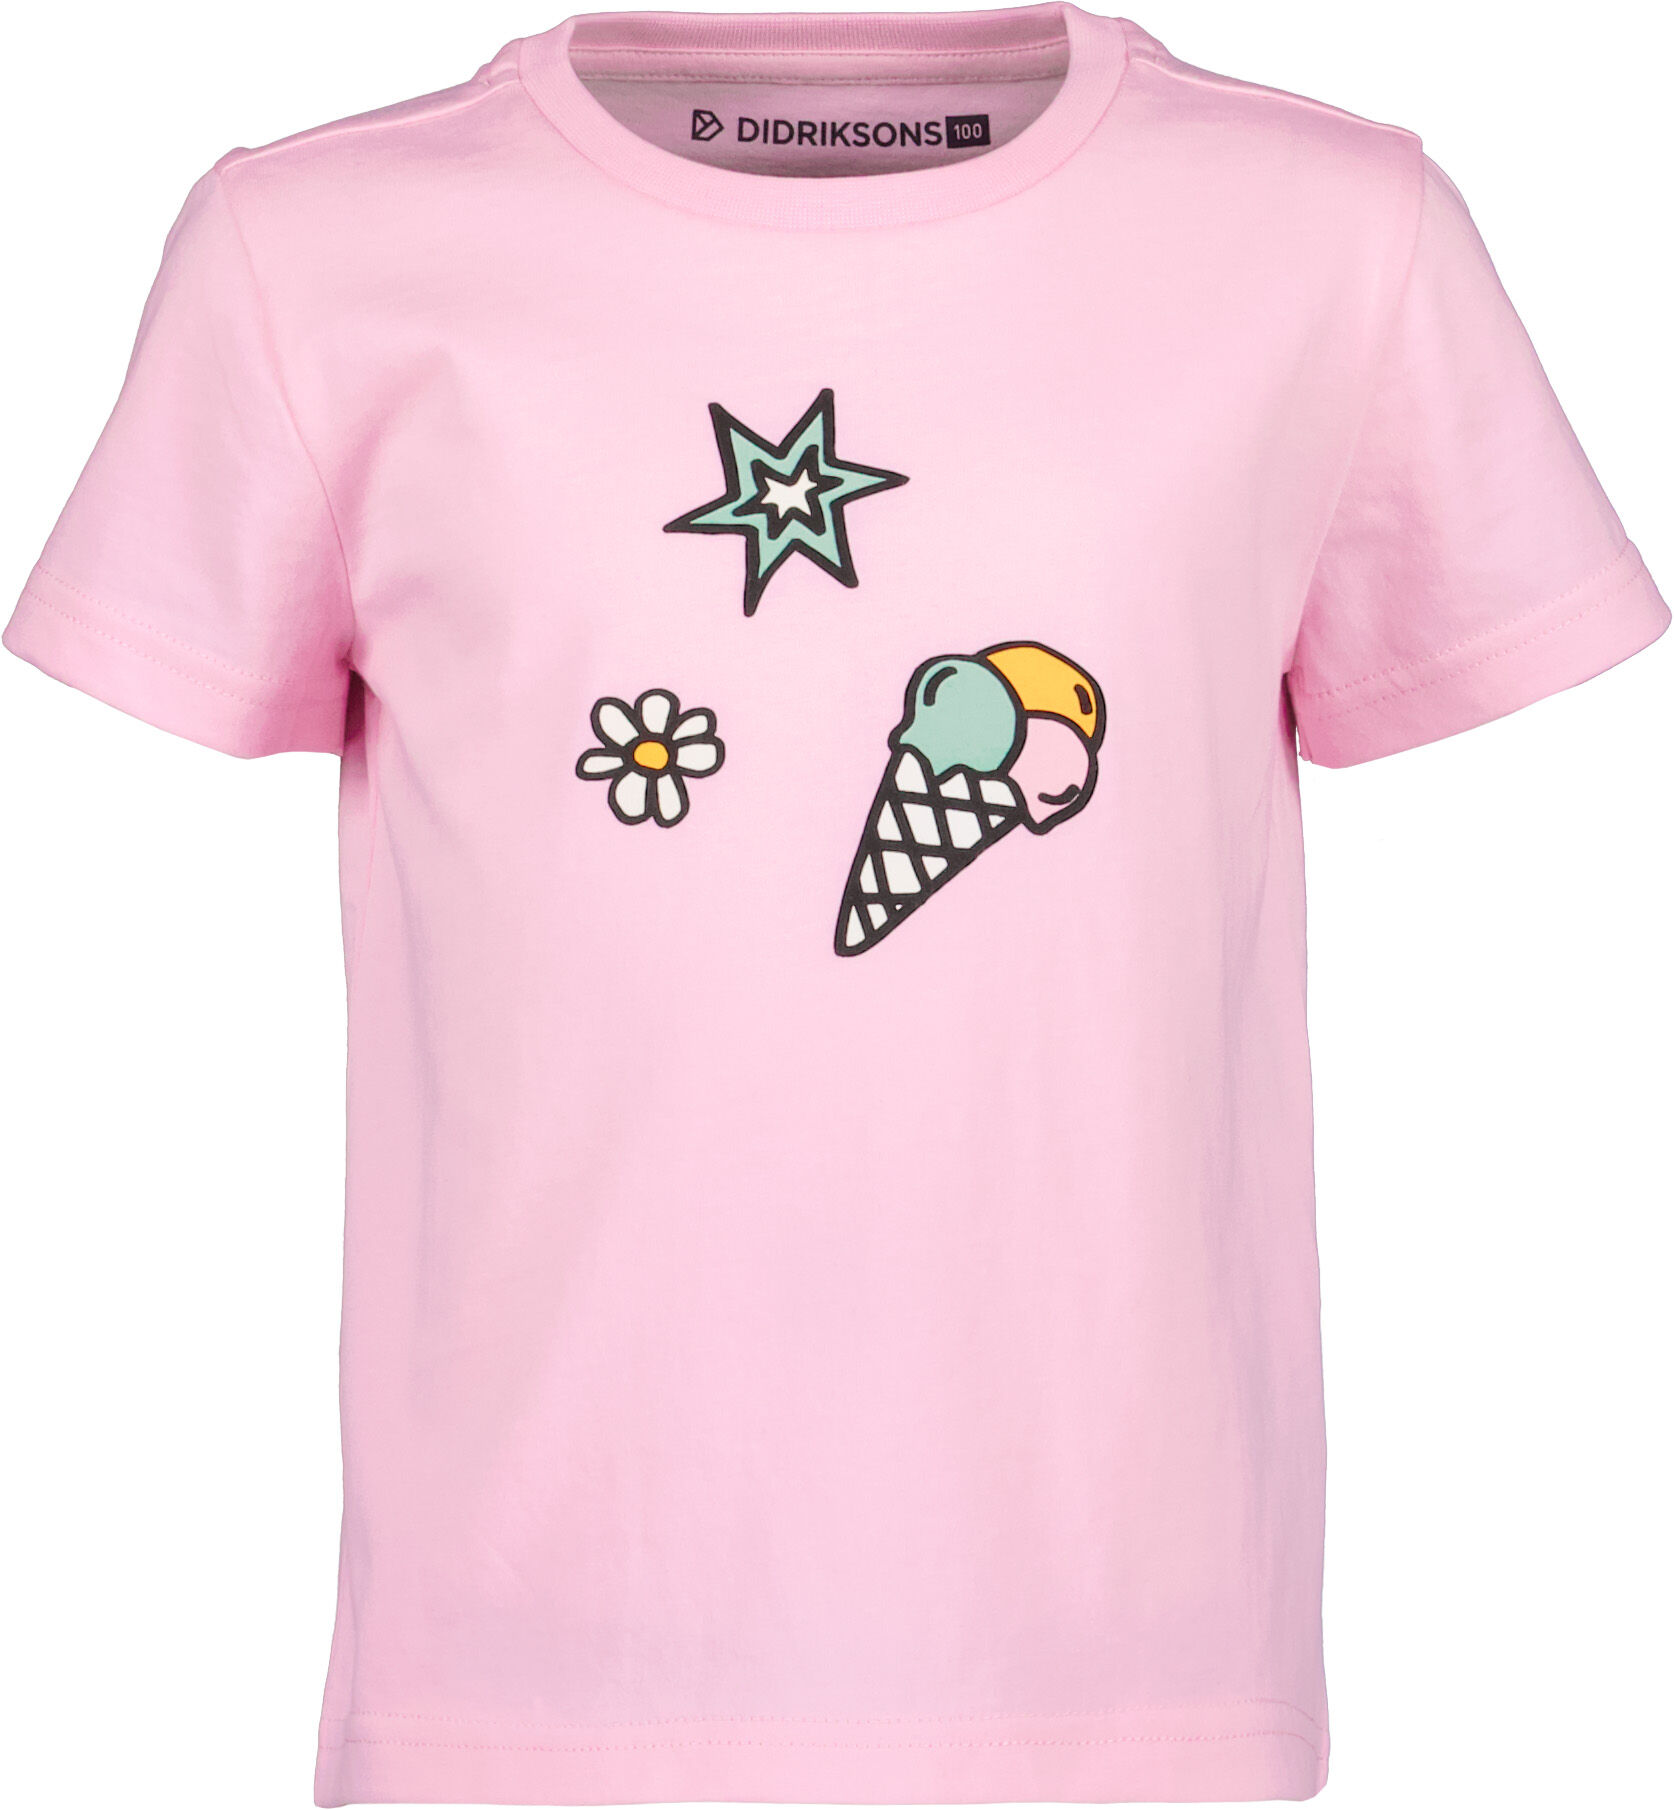 Didriksons Mynta T-shirt Orchid Pink 100